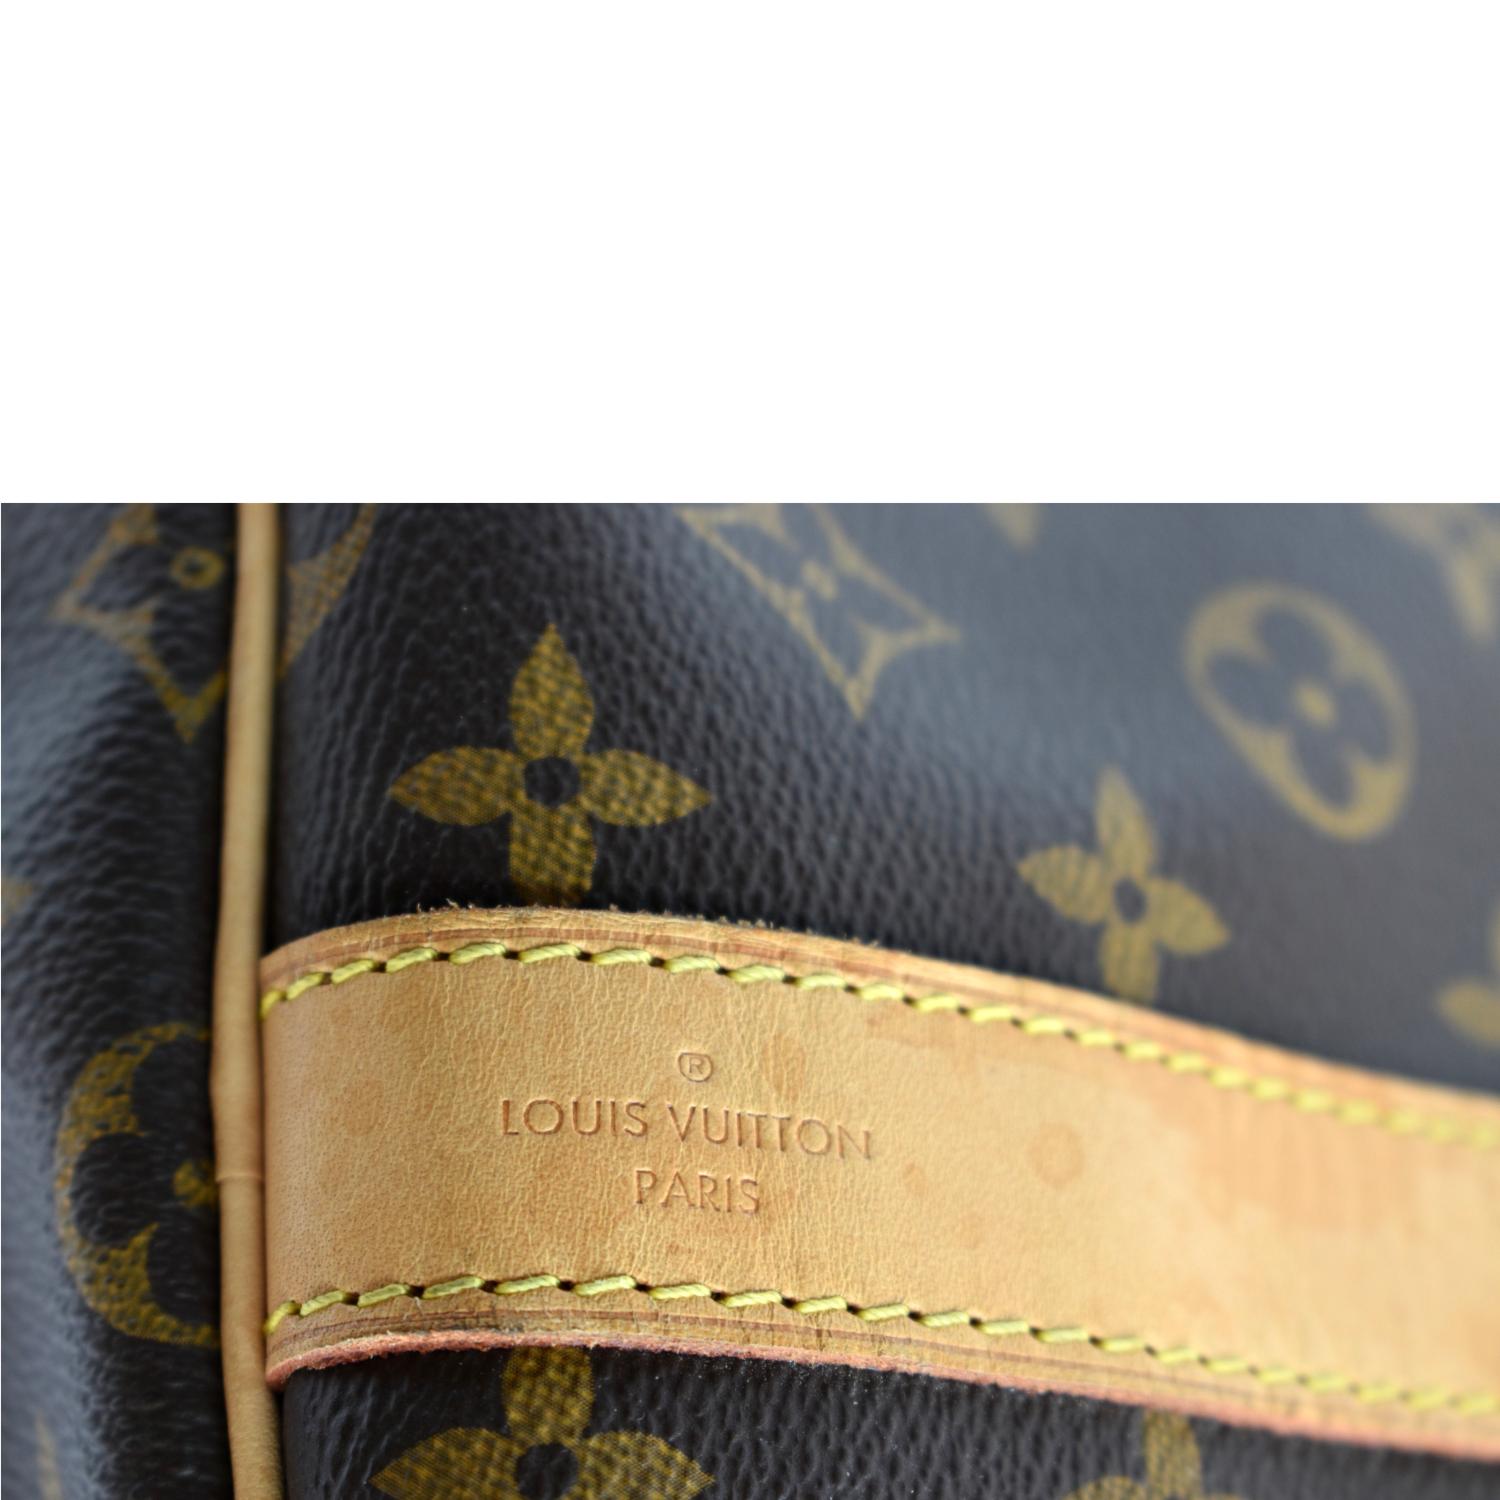 maleta louis vuitton satellite en lona monogram marron y cuero natural, Brown Louis Vuitton Monogram Keepall 55 Travel Bag